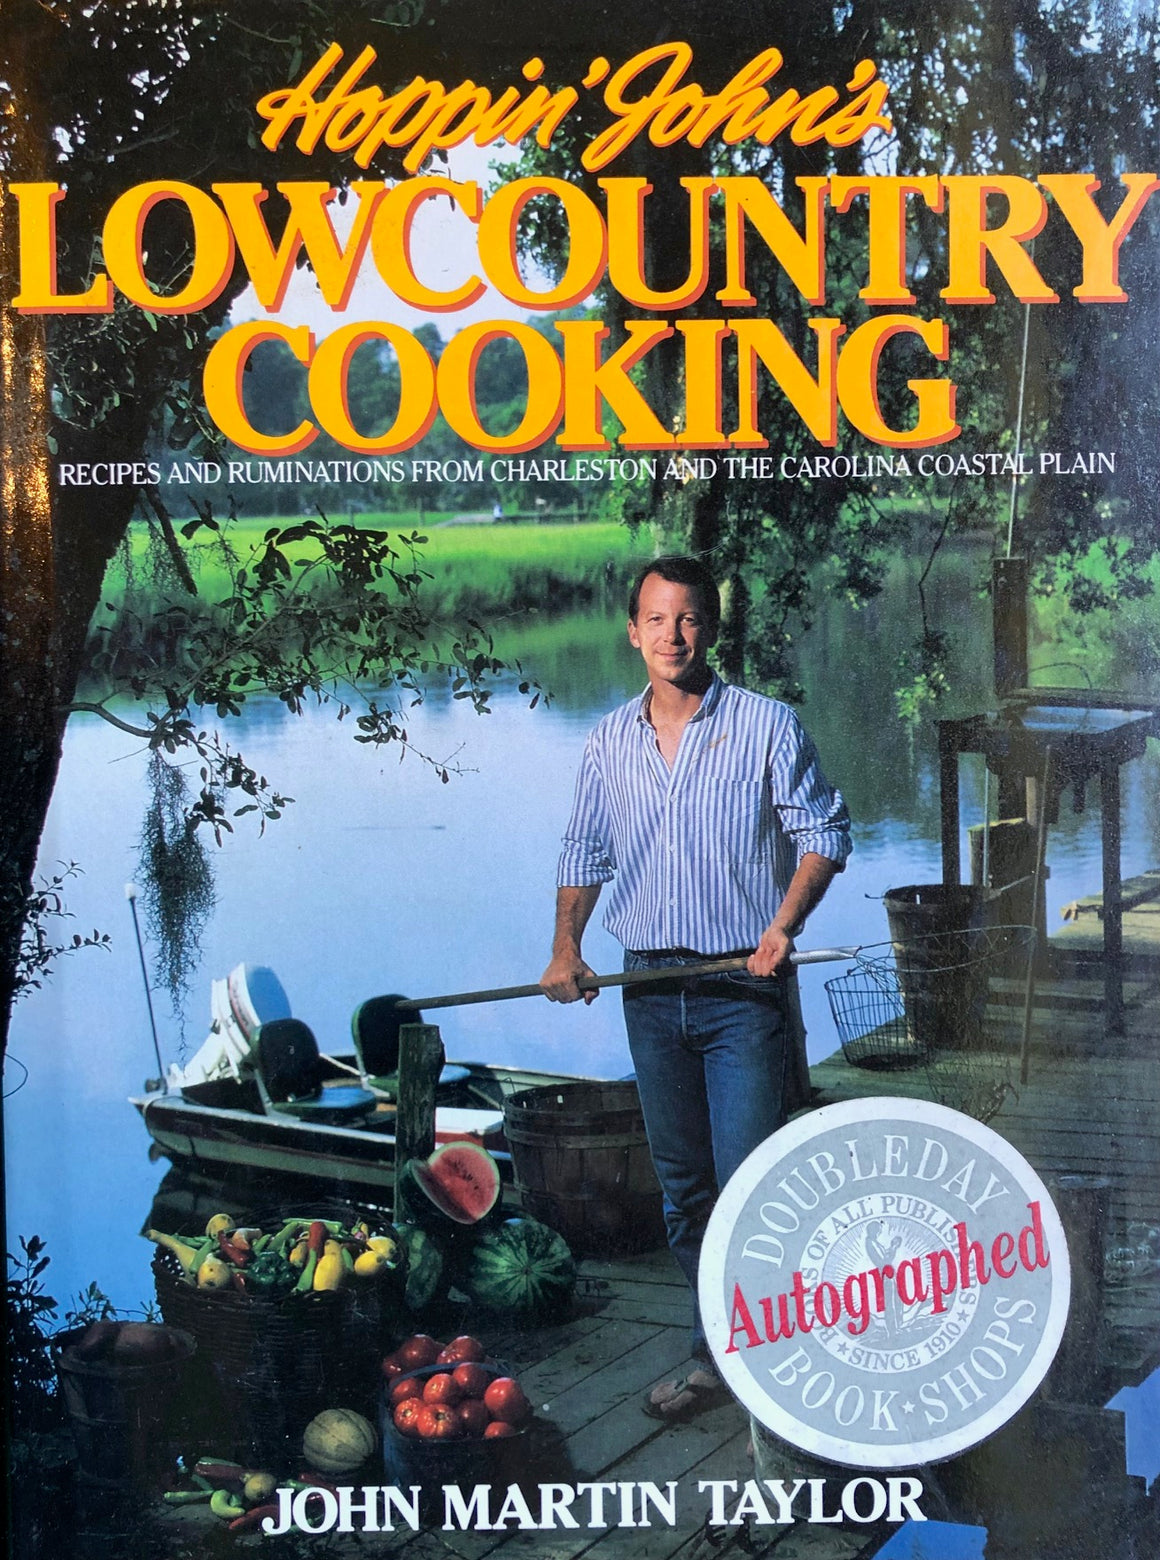 (*NEW ARRIVAL*) (Southern - South Carolina) John Martin Taylor. Hoppin' John's Low Country Cooking. SIGNED!